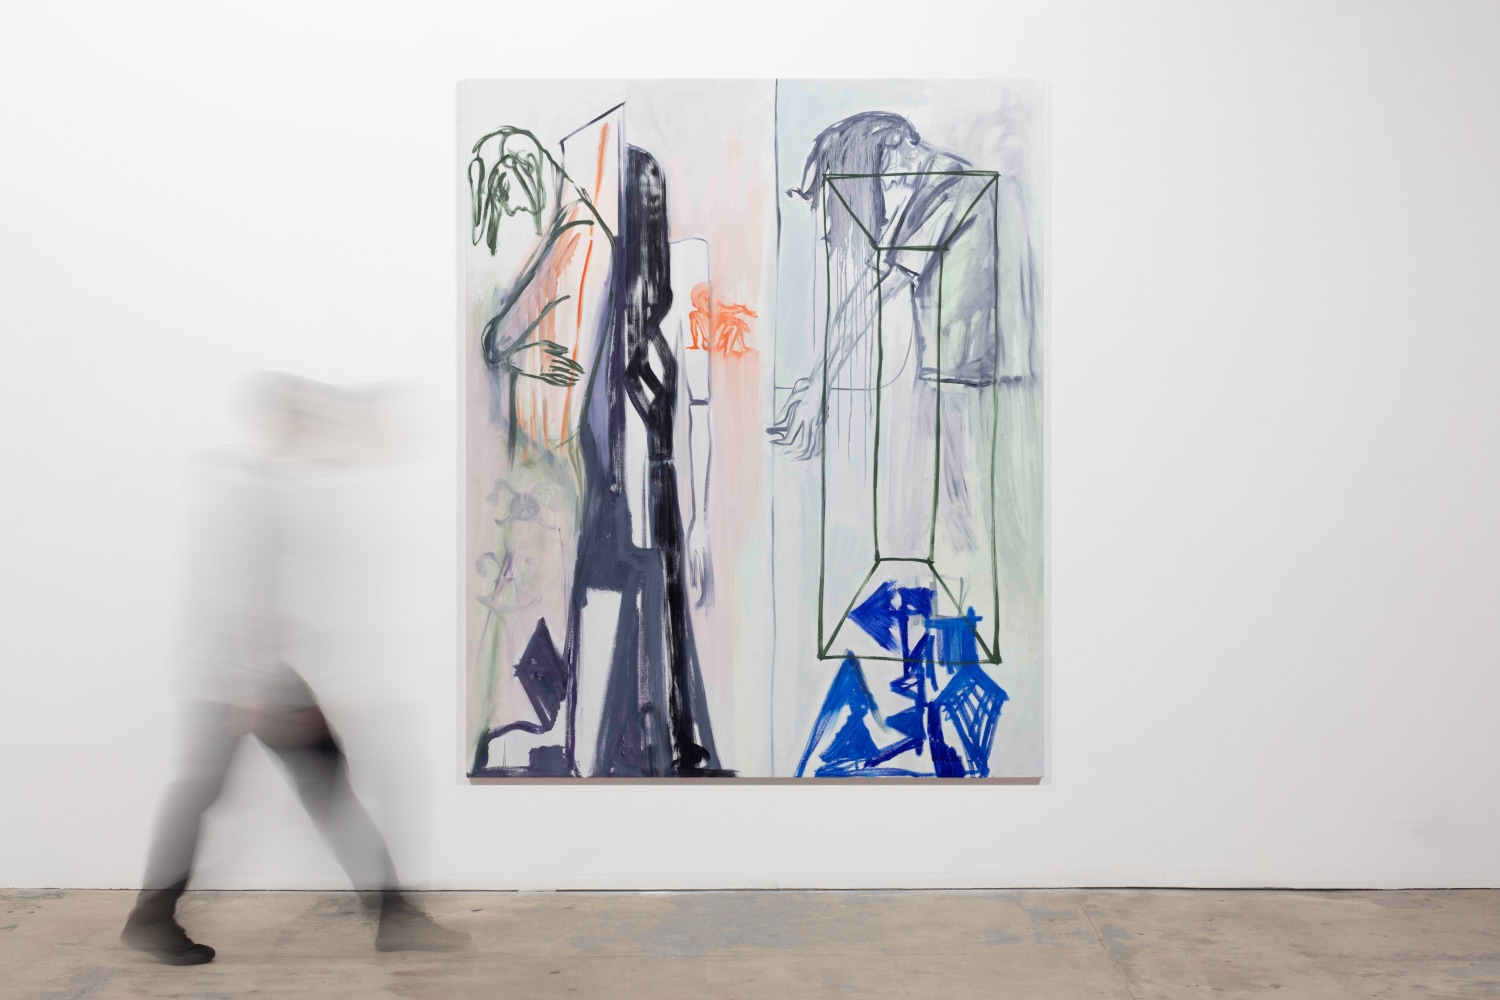 Stefania&amp;nbsp;Batoeva
Untitled, 2021
oil on canvas
90.5 x 74.8 in
230 x 190 x 3.6 cm